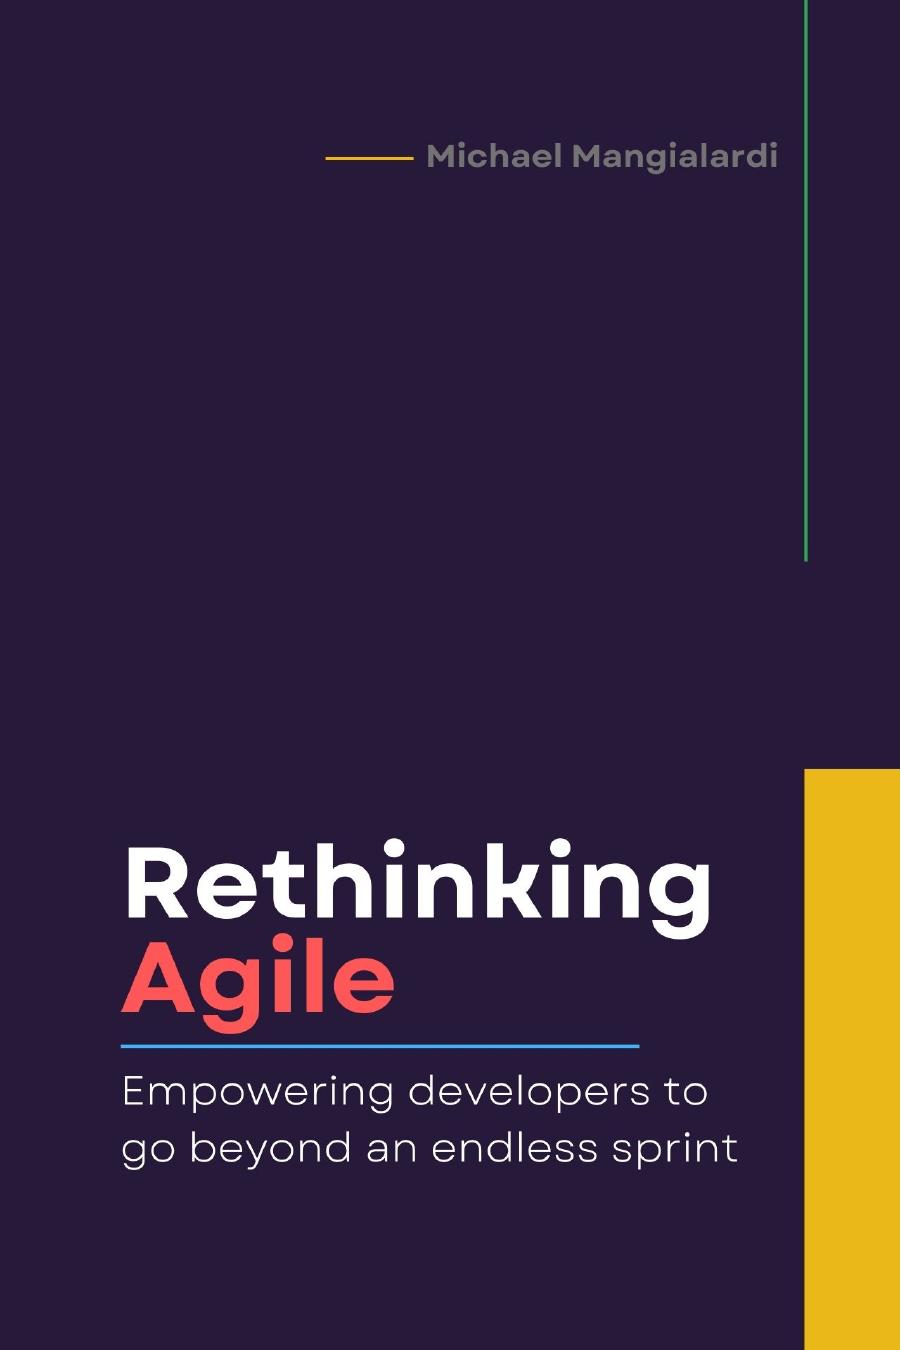 Rethinking Agile by Michael Mangialardi